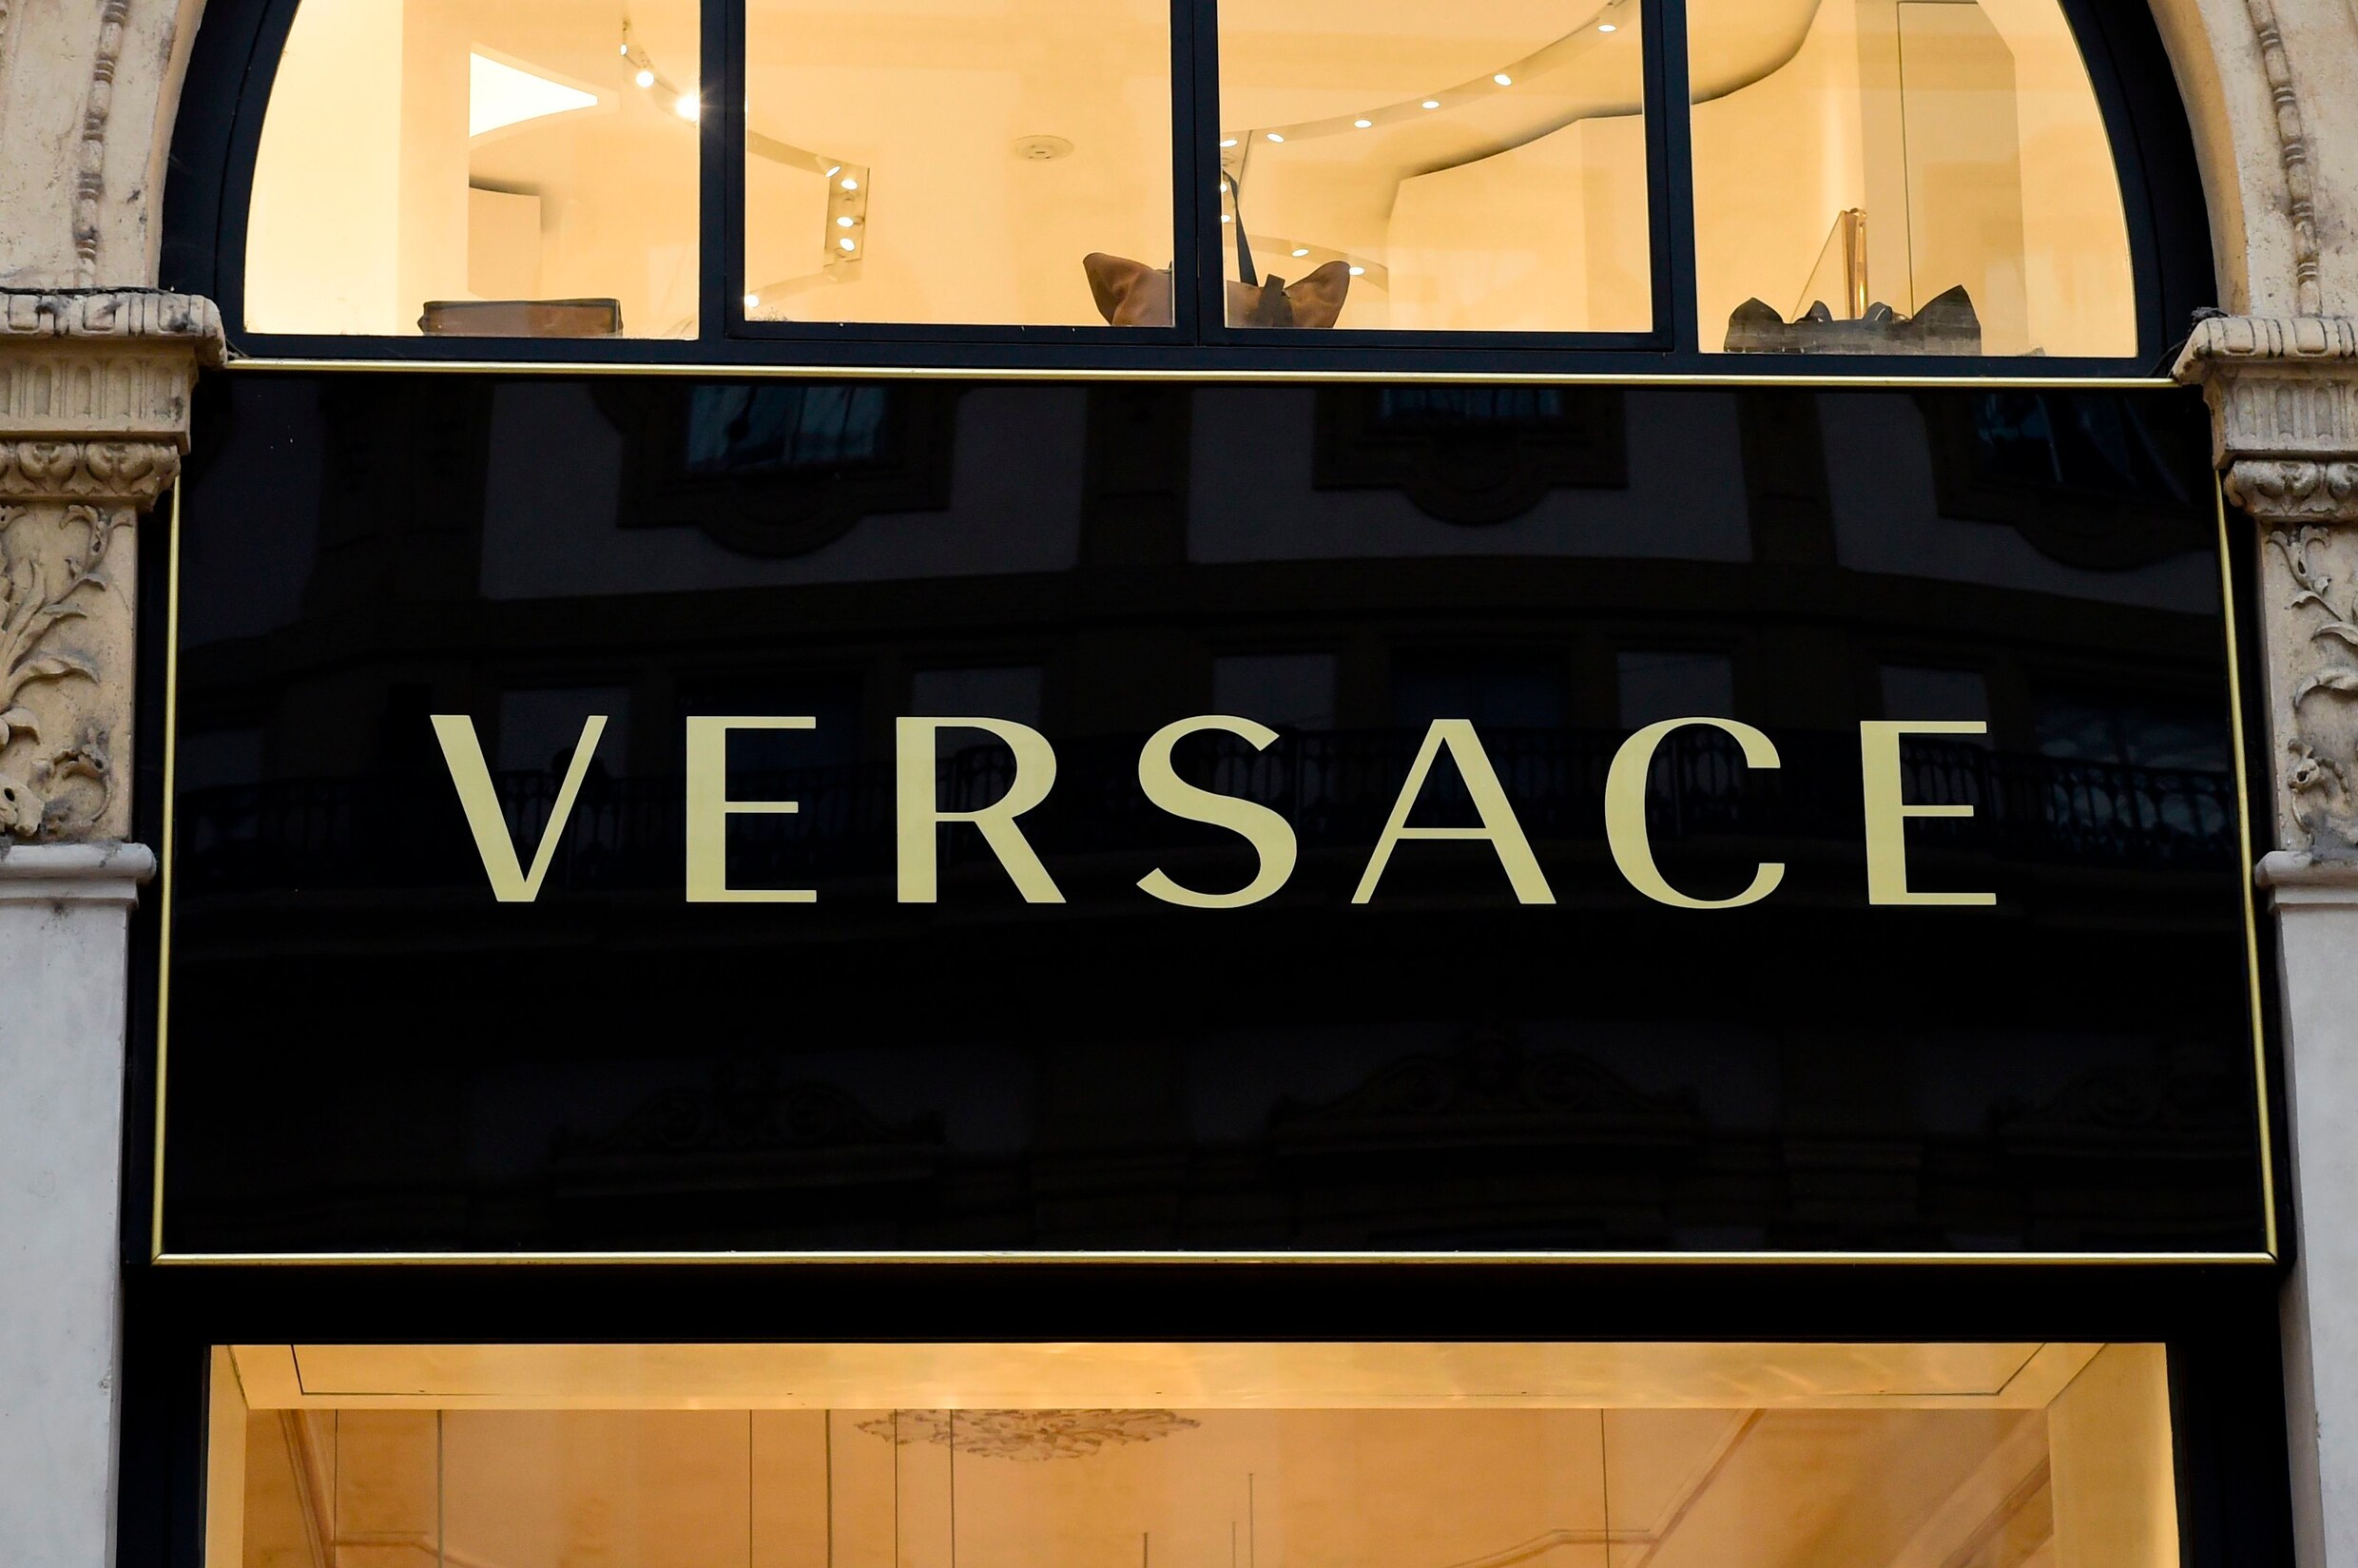 Michael Kors koopt modehuis Versace voor meer dan 1,8 miljard euro